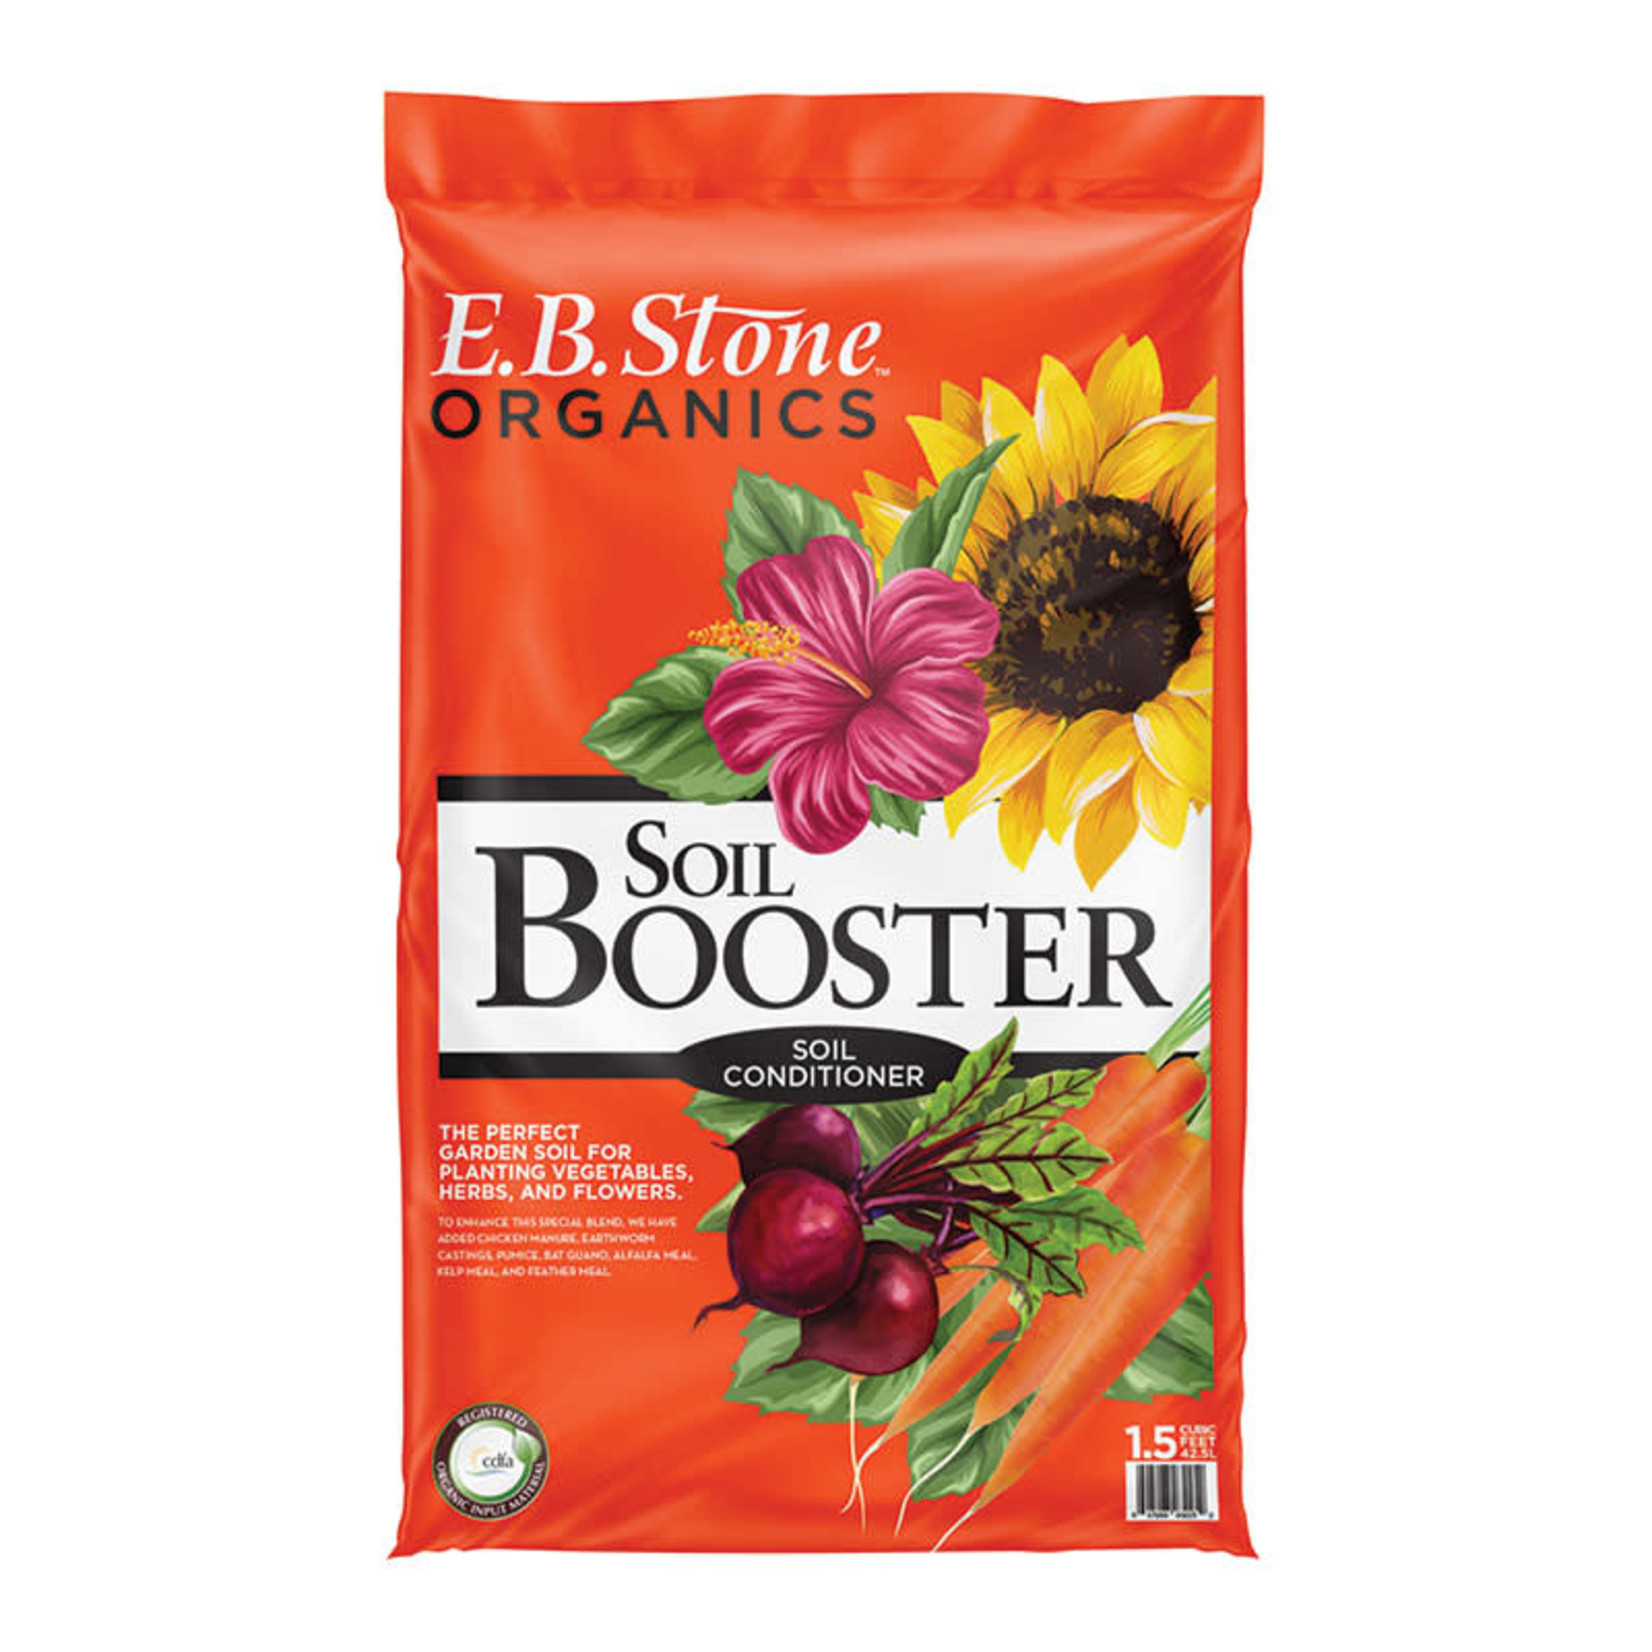 E.B. Stone Organics E.B. Stone Soil Booster 1.5 cubic feet